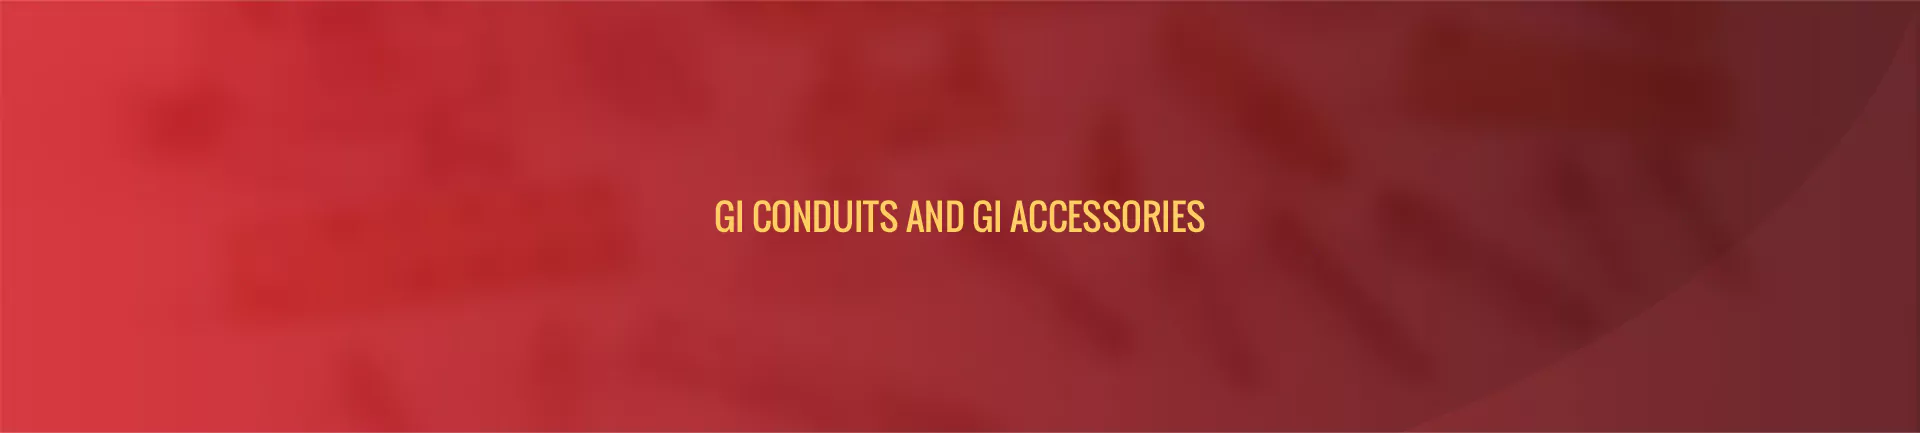 gi-conduits-and-gi-accessories-banner